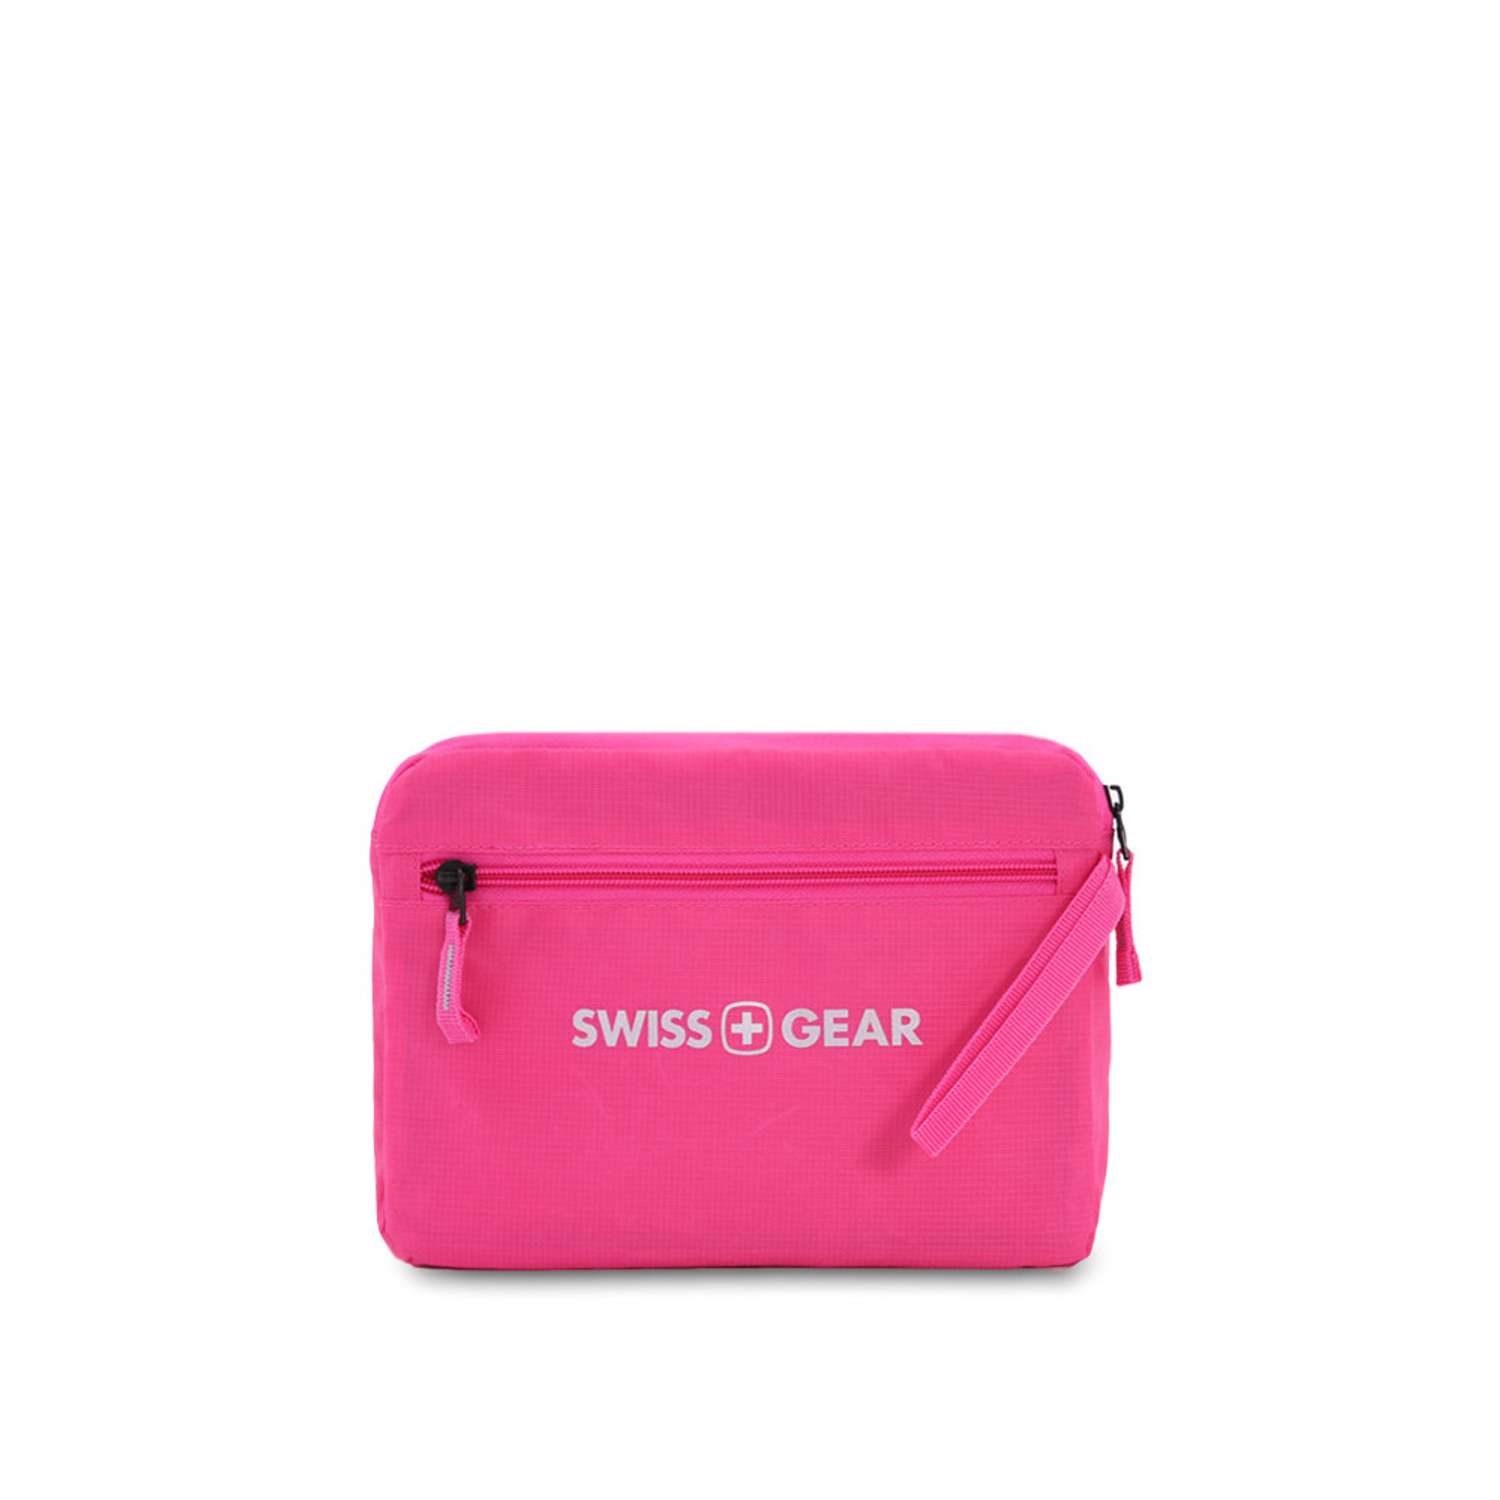 Рюкзак Swissgear складной розовый - фото 2